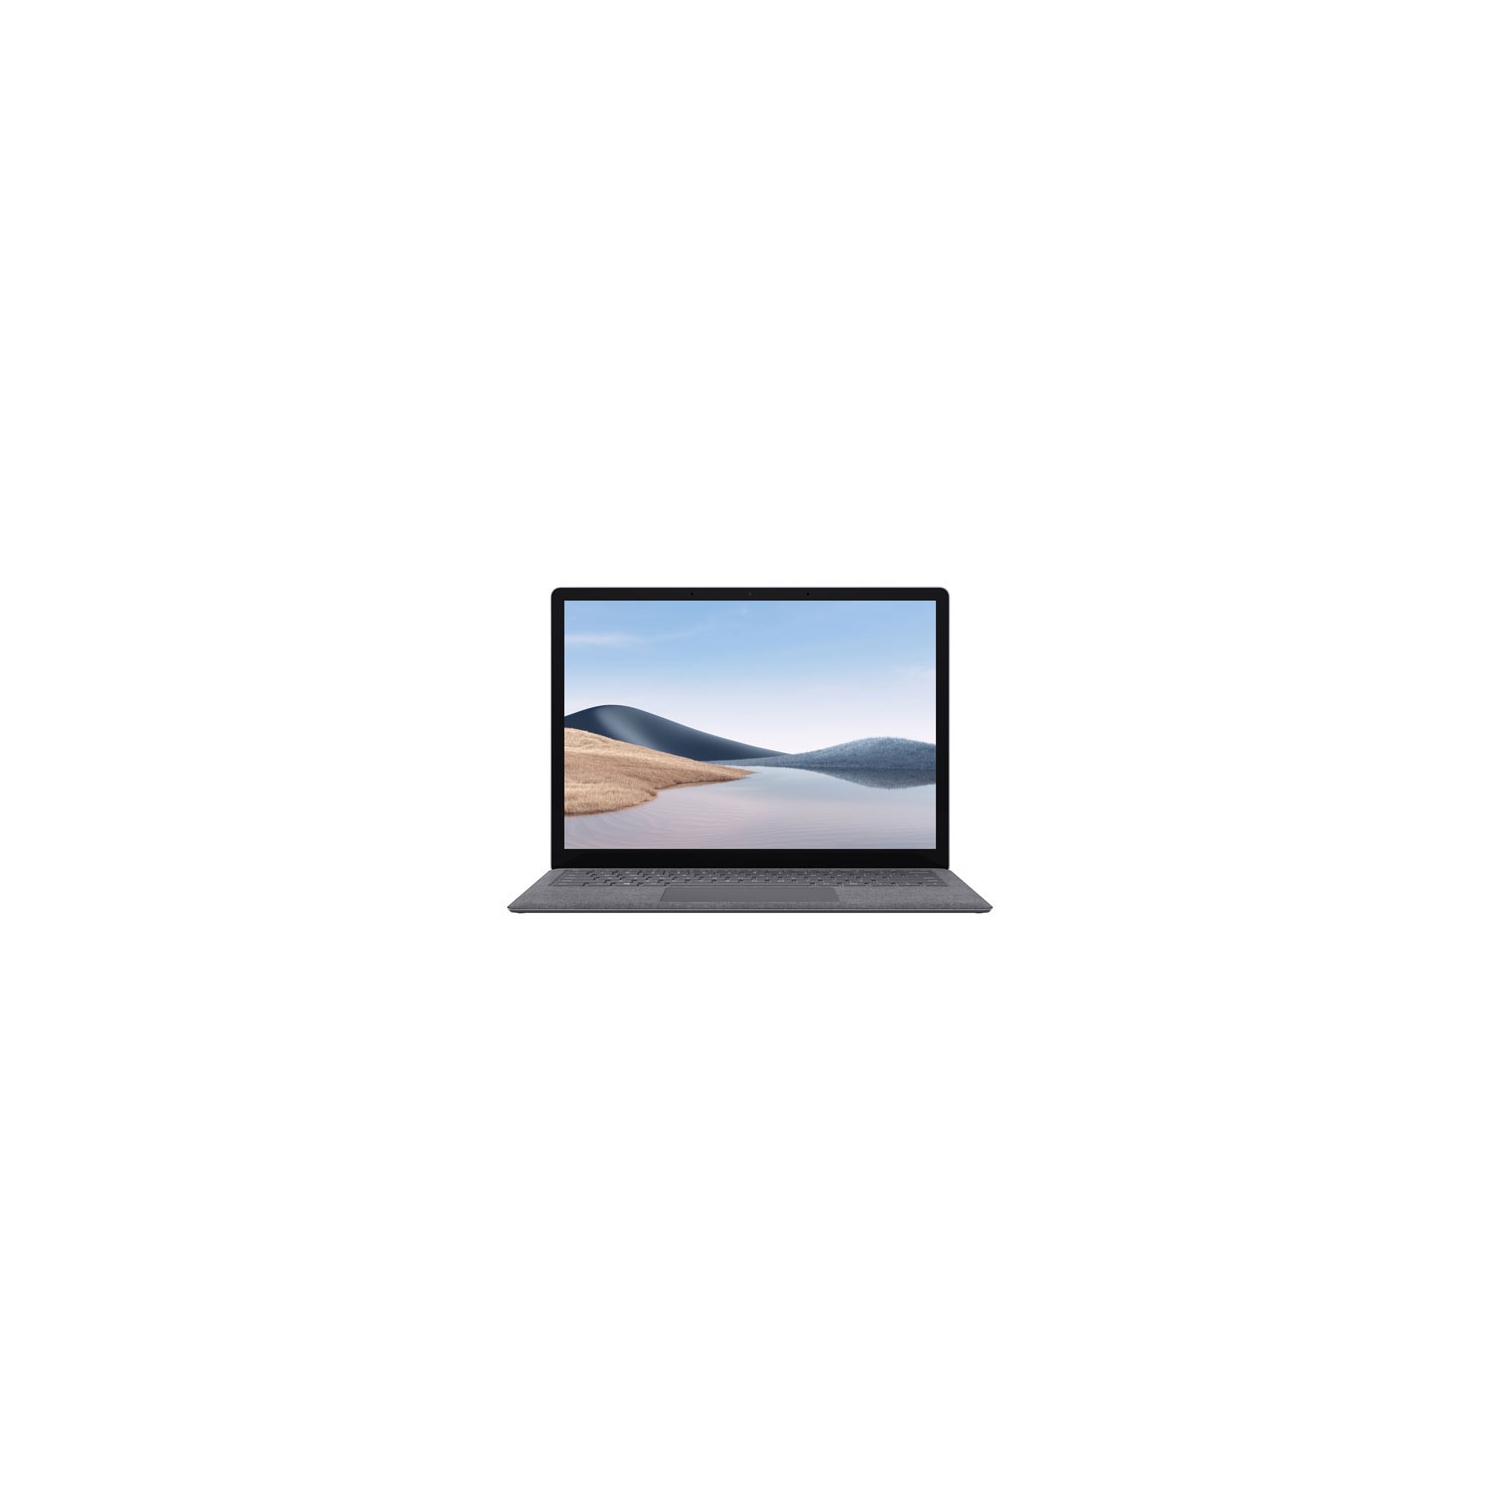 Refurbished (Good) - Microsoft Surface Laptop 4 13.5" - Platinum (Intel Core i5-1135G7/512GB SSD/8GB RAM) - Eng